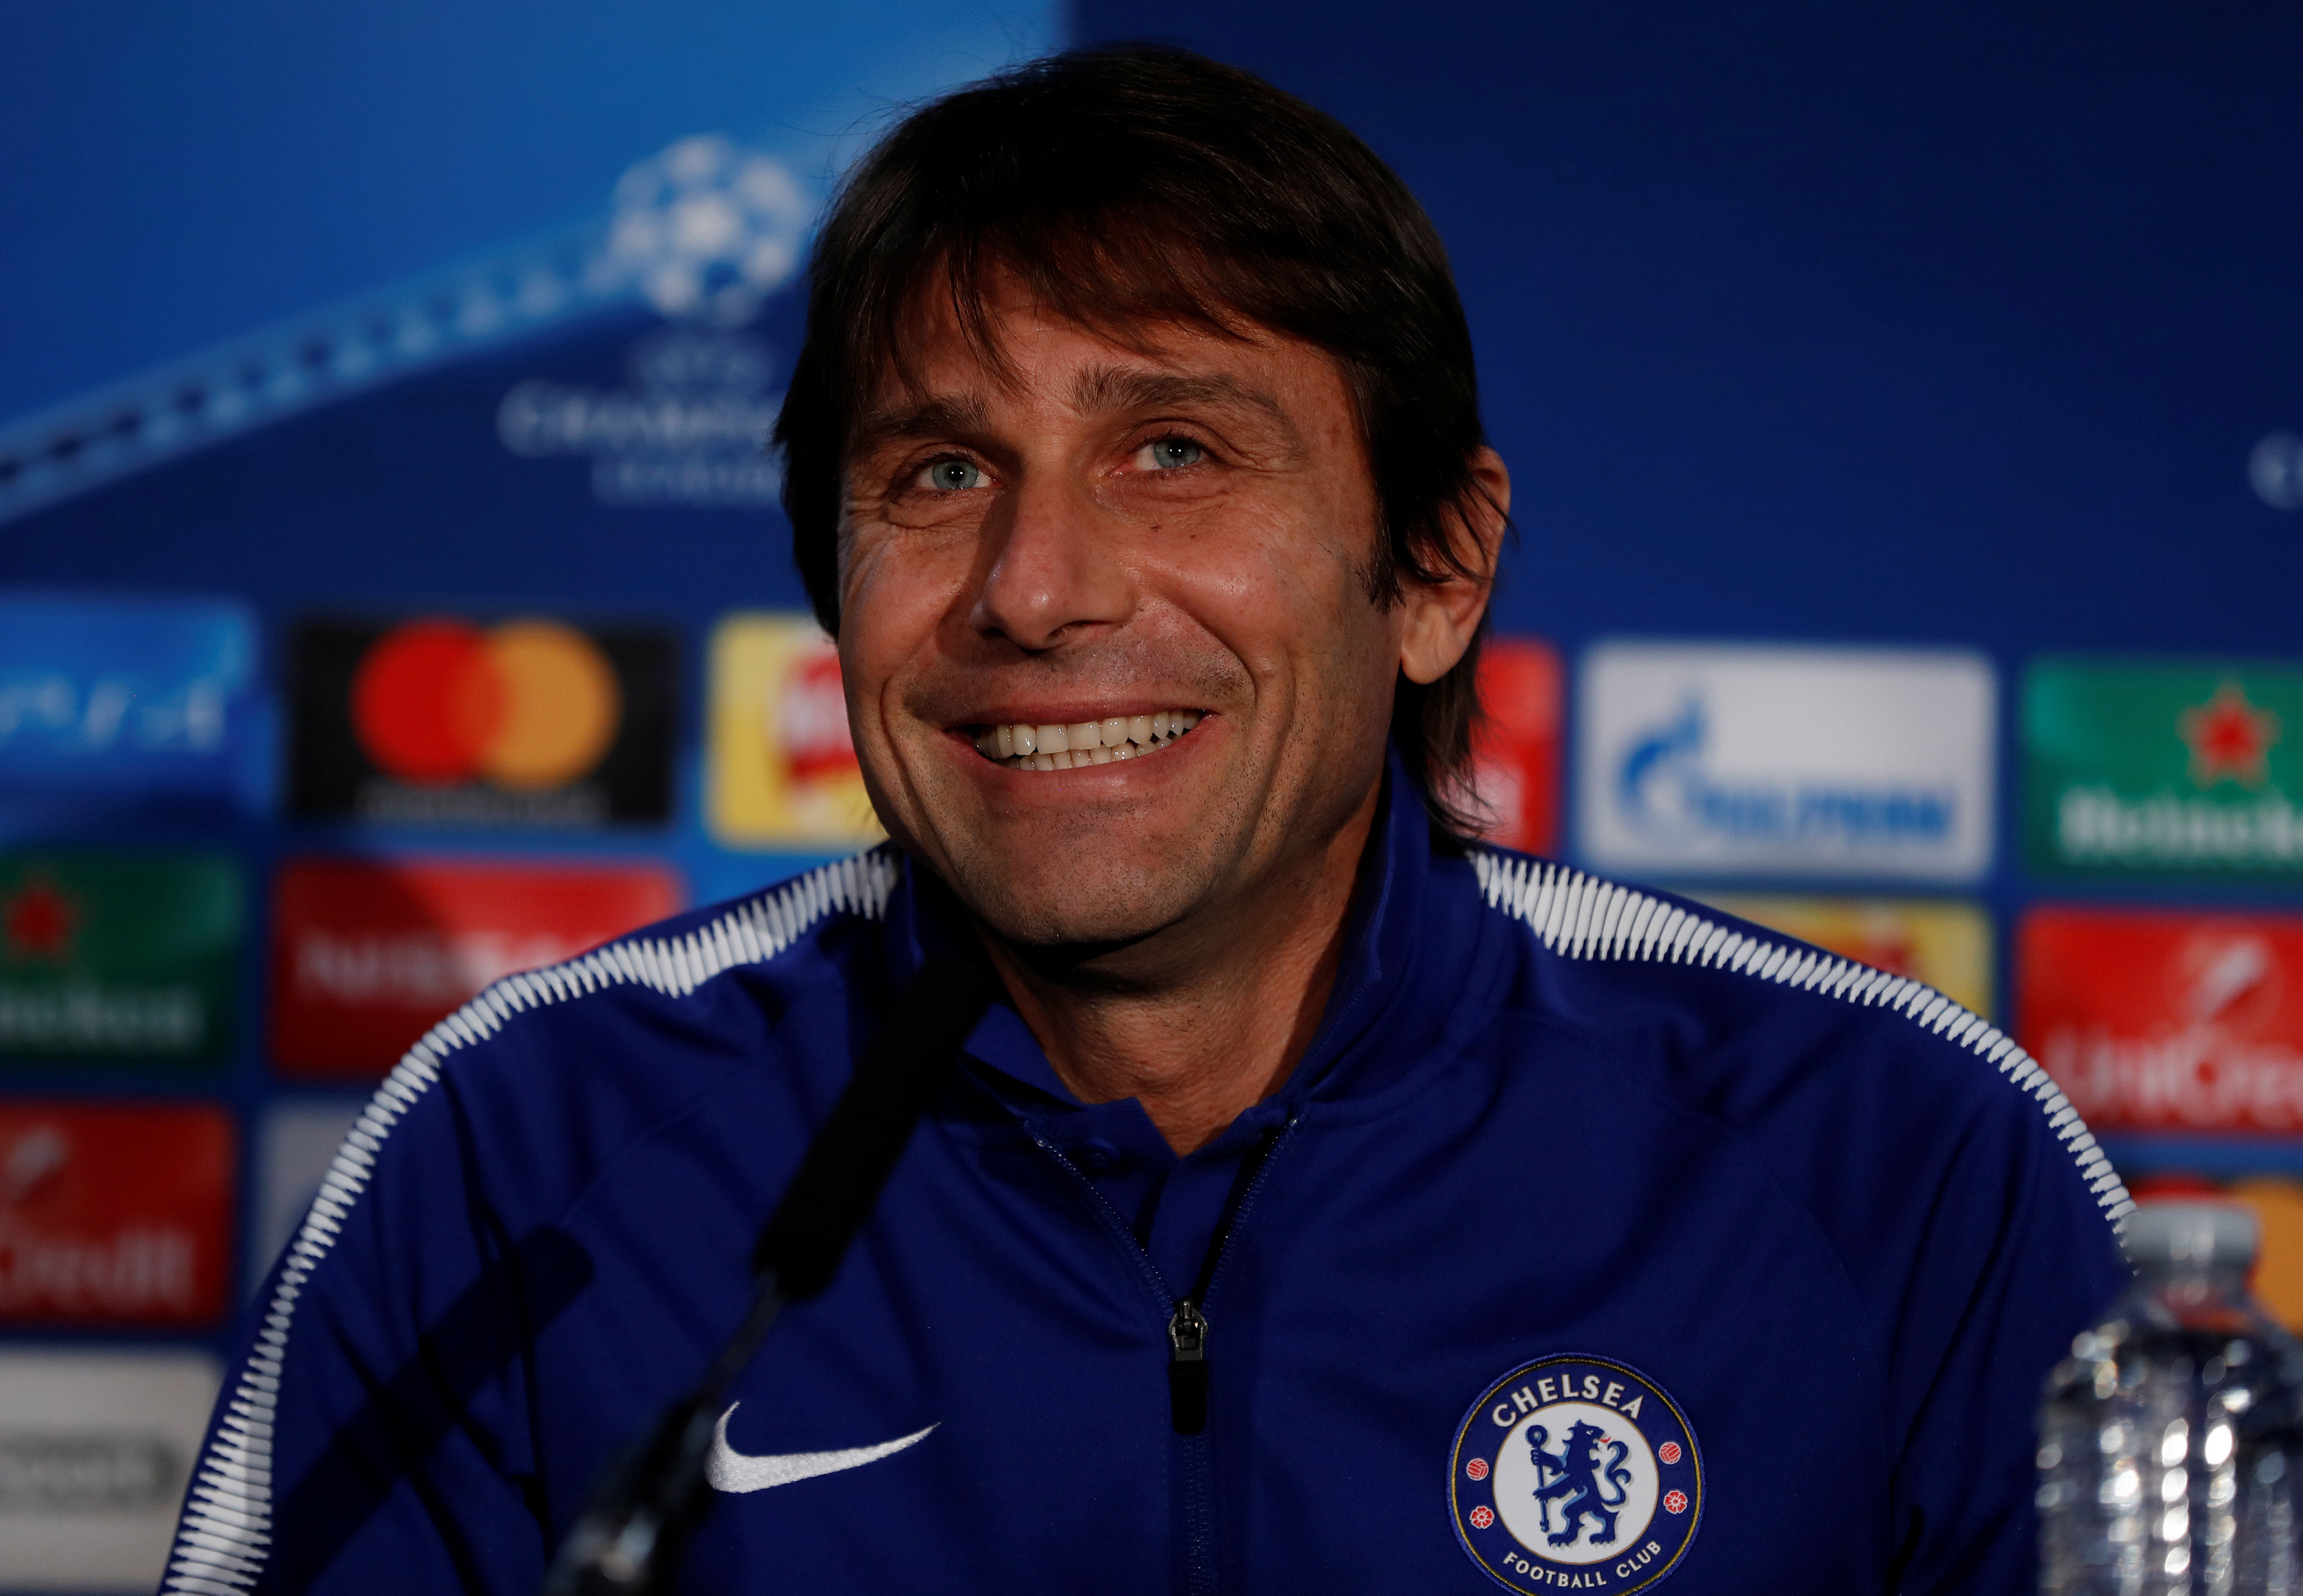 Football: Chelsea prepared to face big teams, says Conte